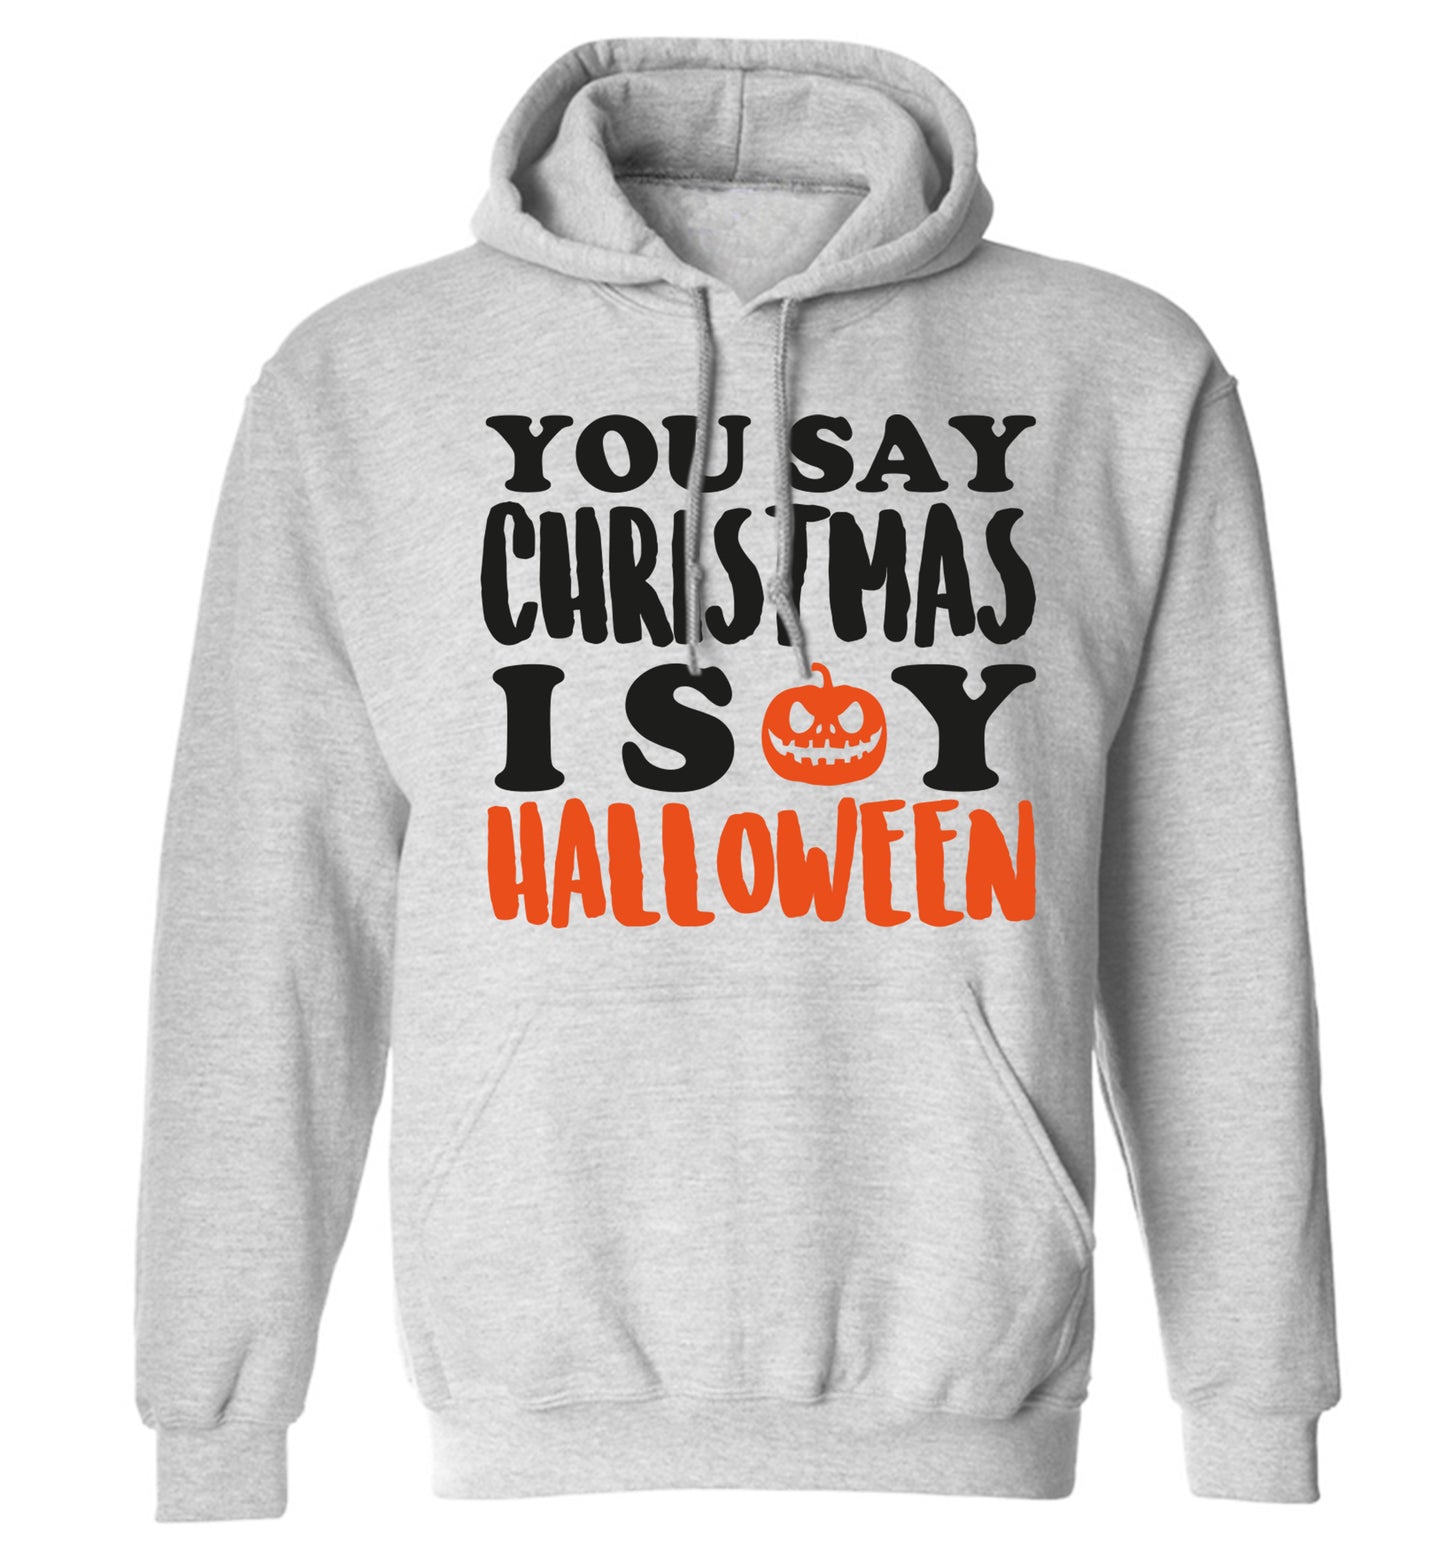 You say christmas I say halloween! adults unisex grey hoodie 2XL